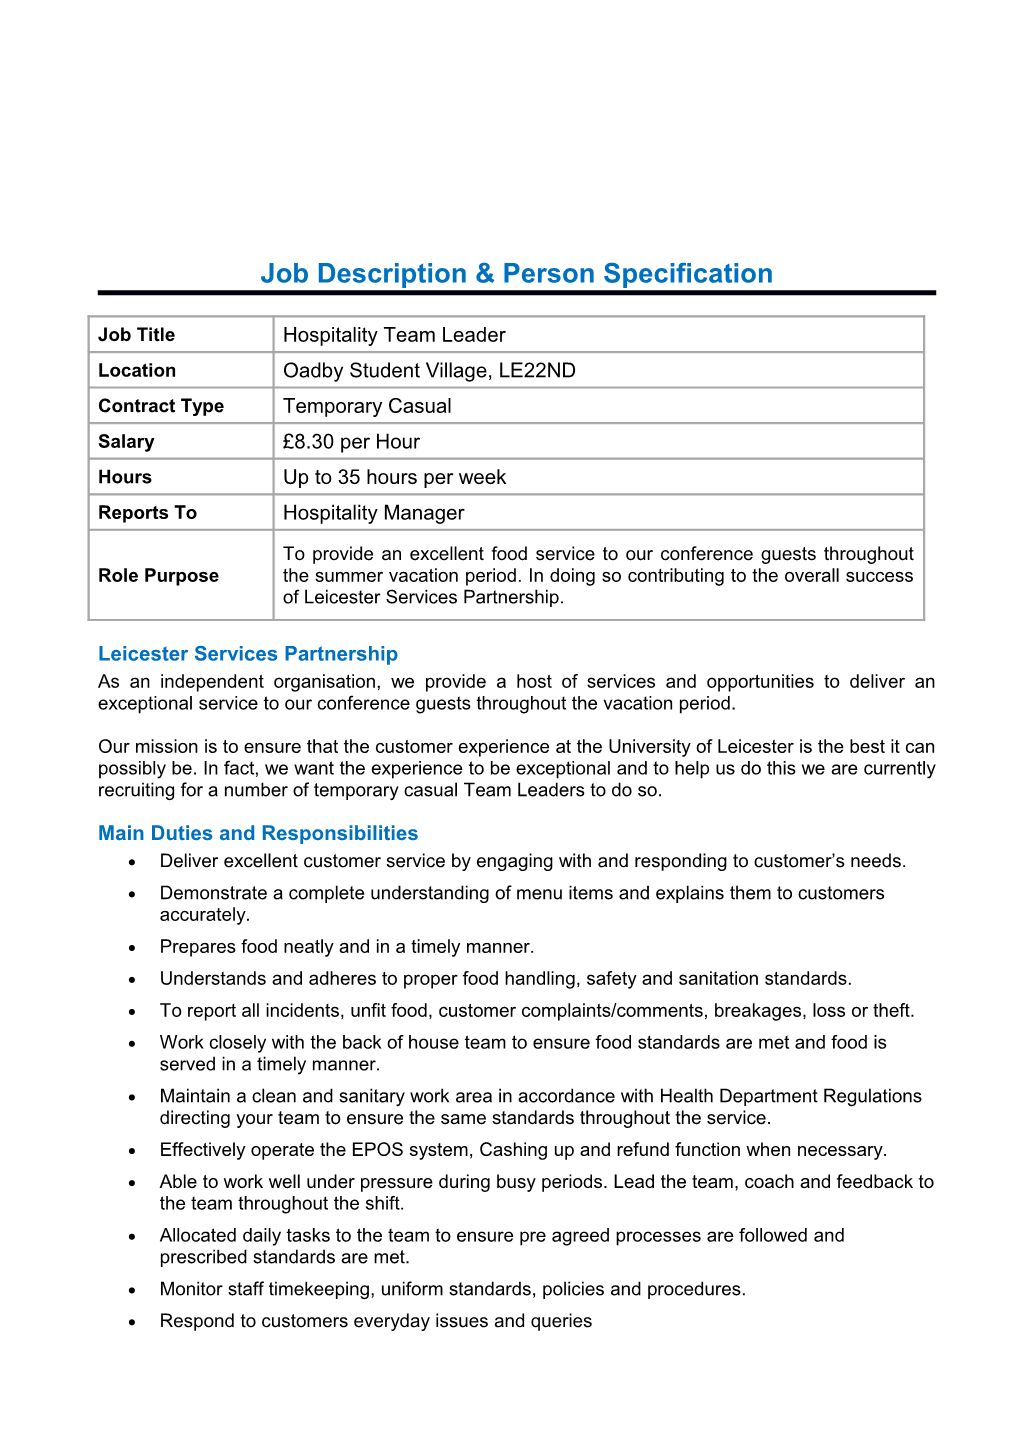 Job Description & Person Specification s8